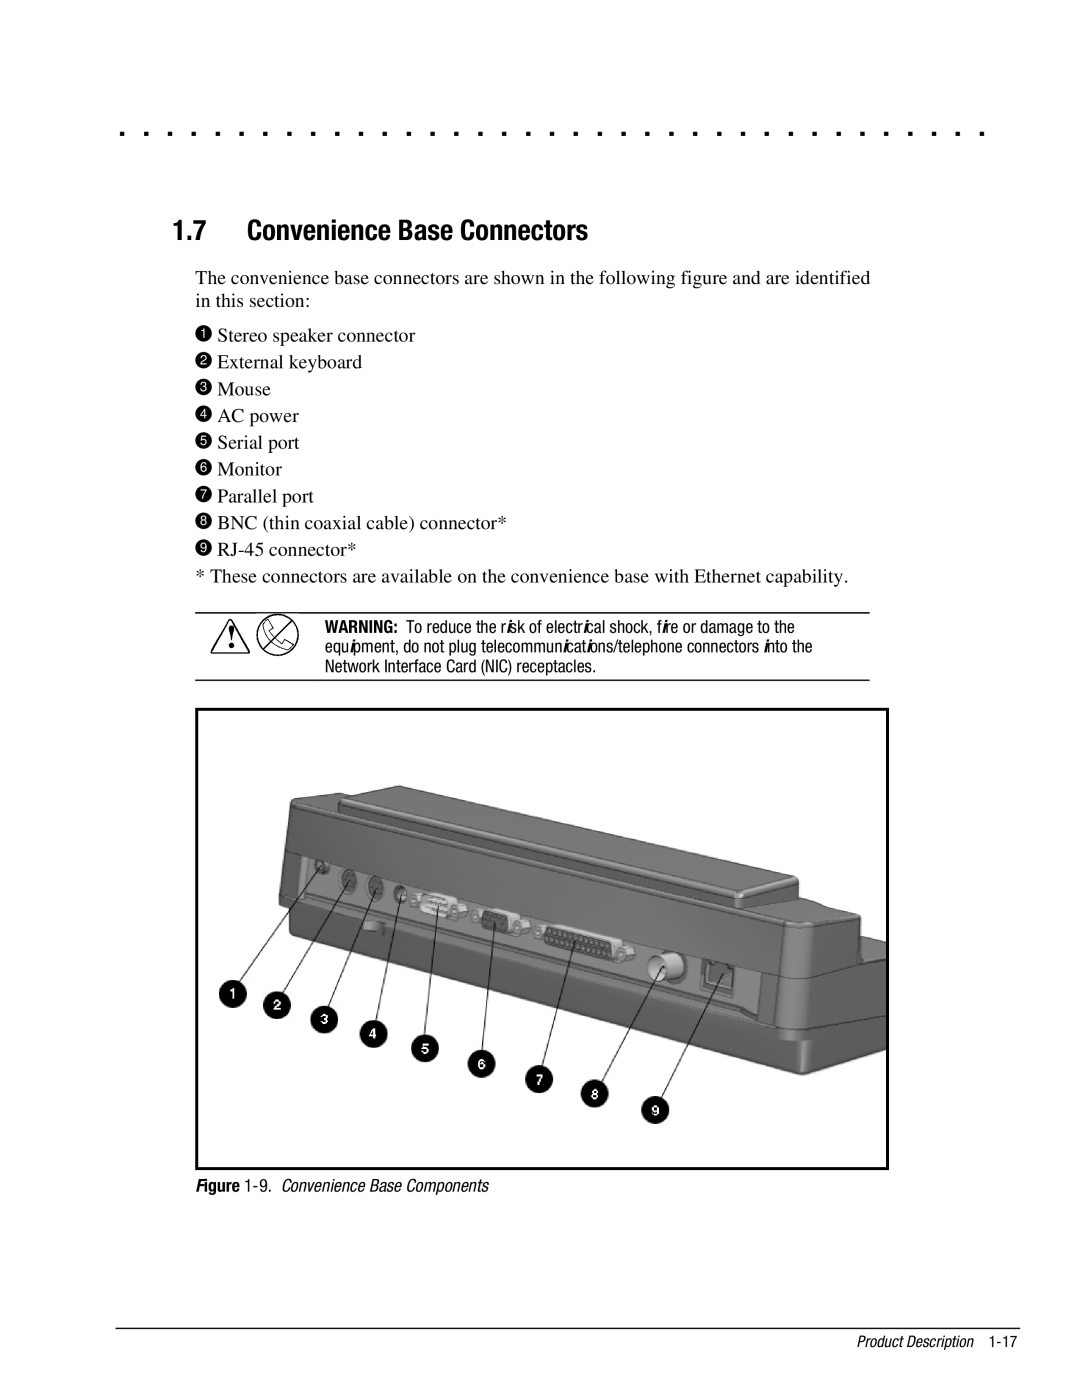 Compaq 4115, 4130T, 4150T, 4140T, 4131T, 4200, 4125T, 4160T SLIMLINE, 4125D, 4120T, 4110D manual Convenience Base Connectors 